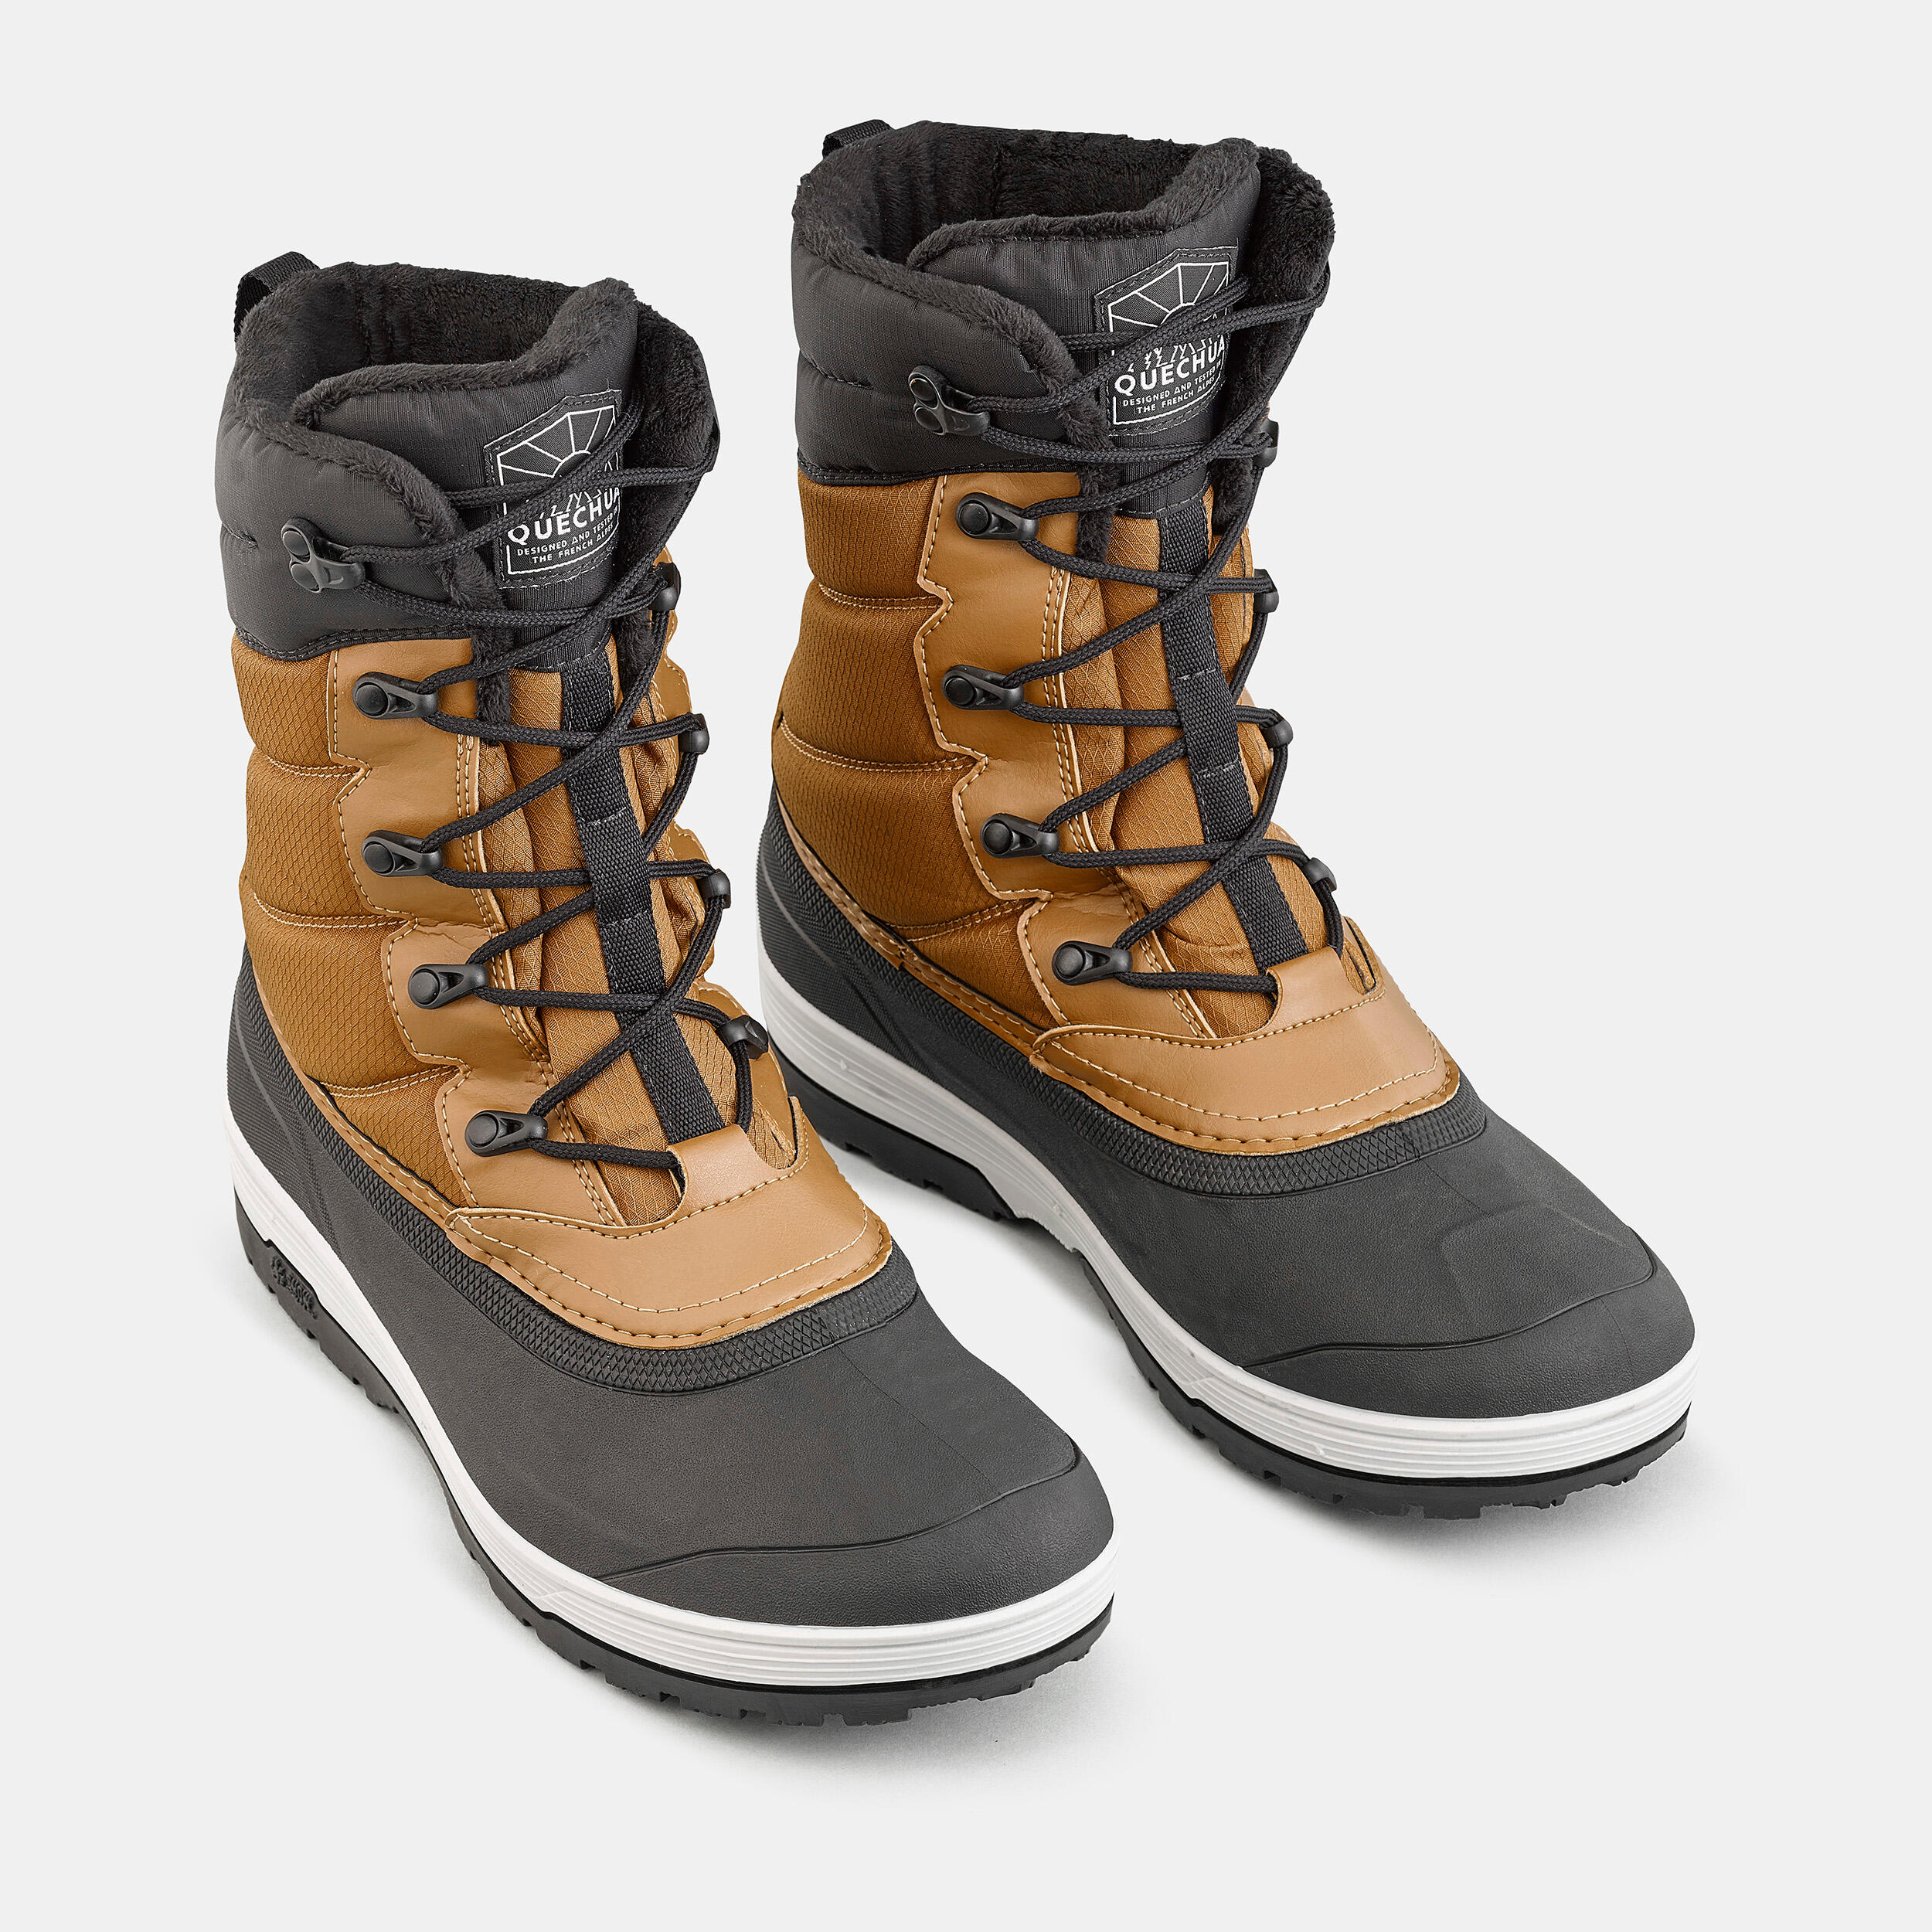 Men’s Warm Waterproof Snow Hiking Boots  - SH500 X- WARM - Lace 4/9